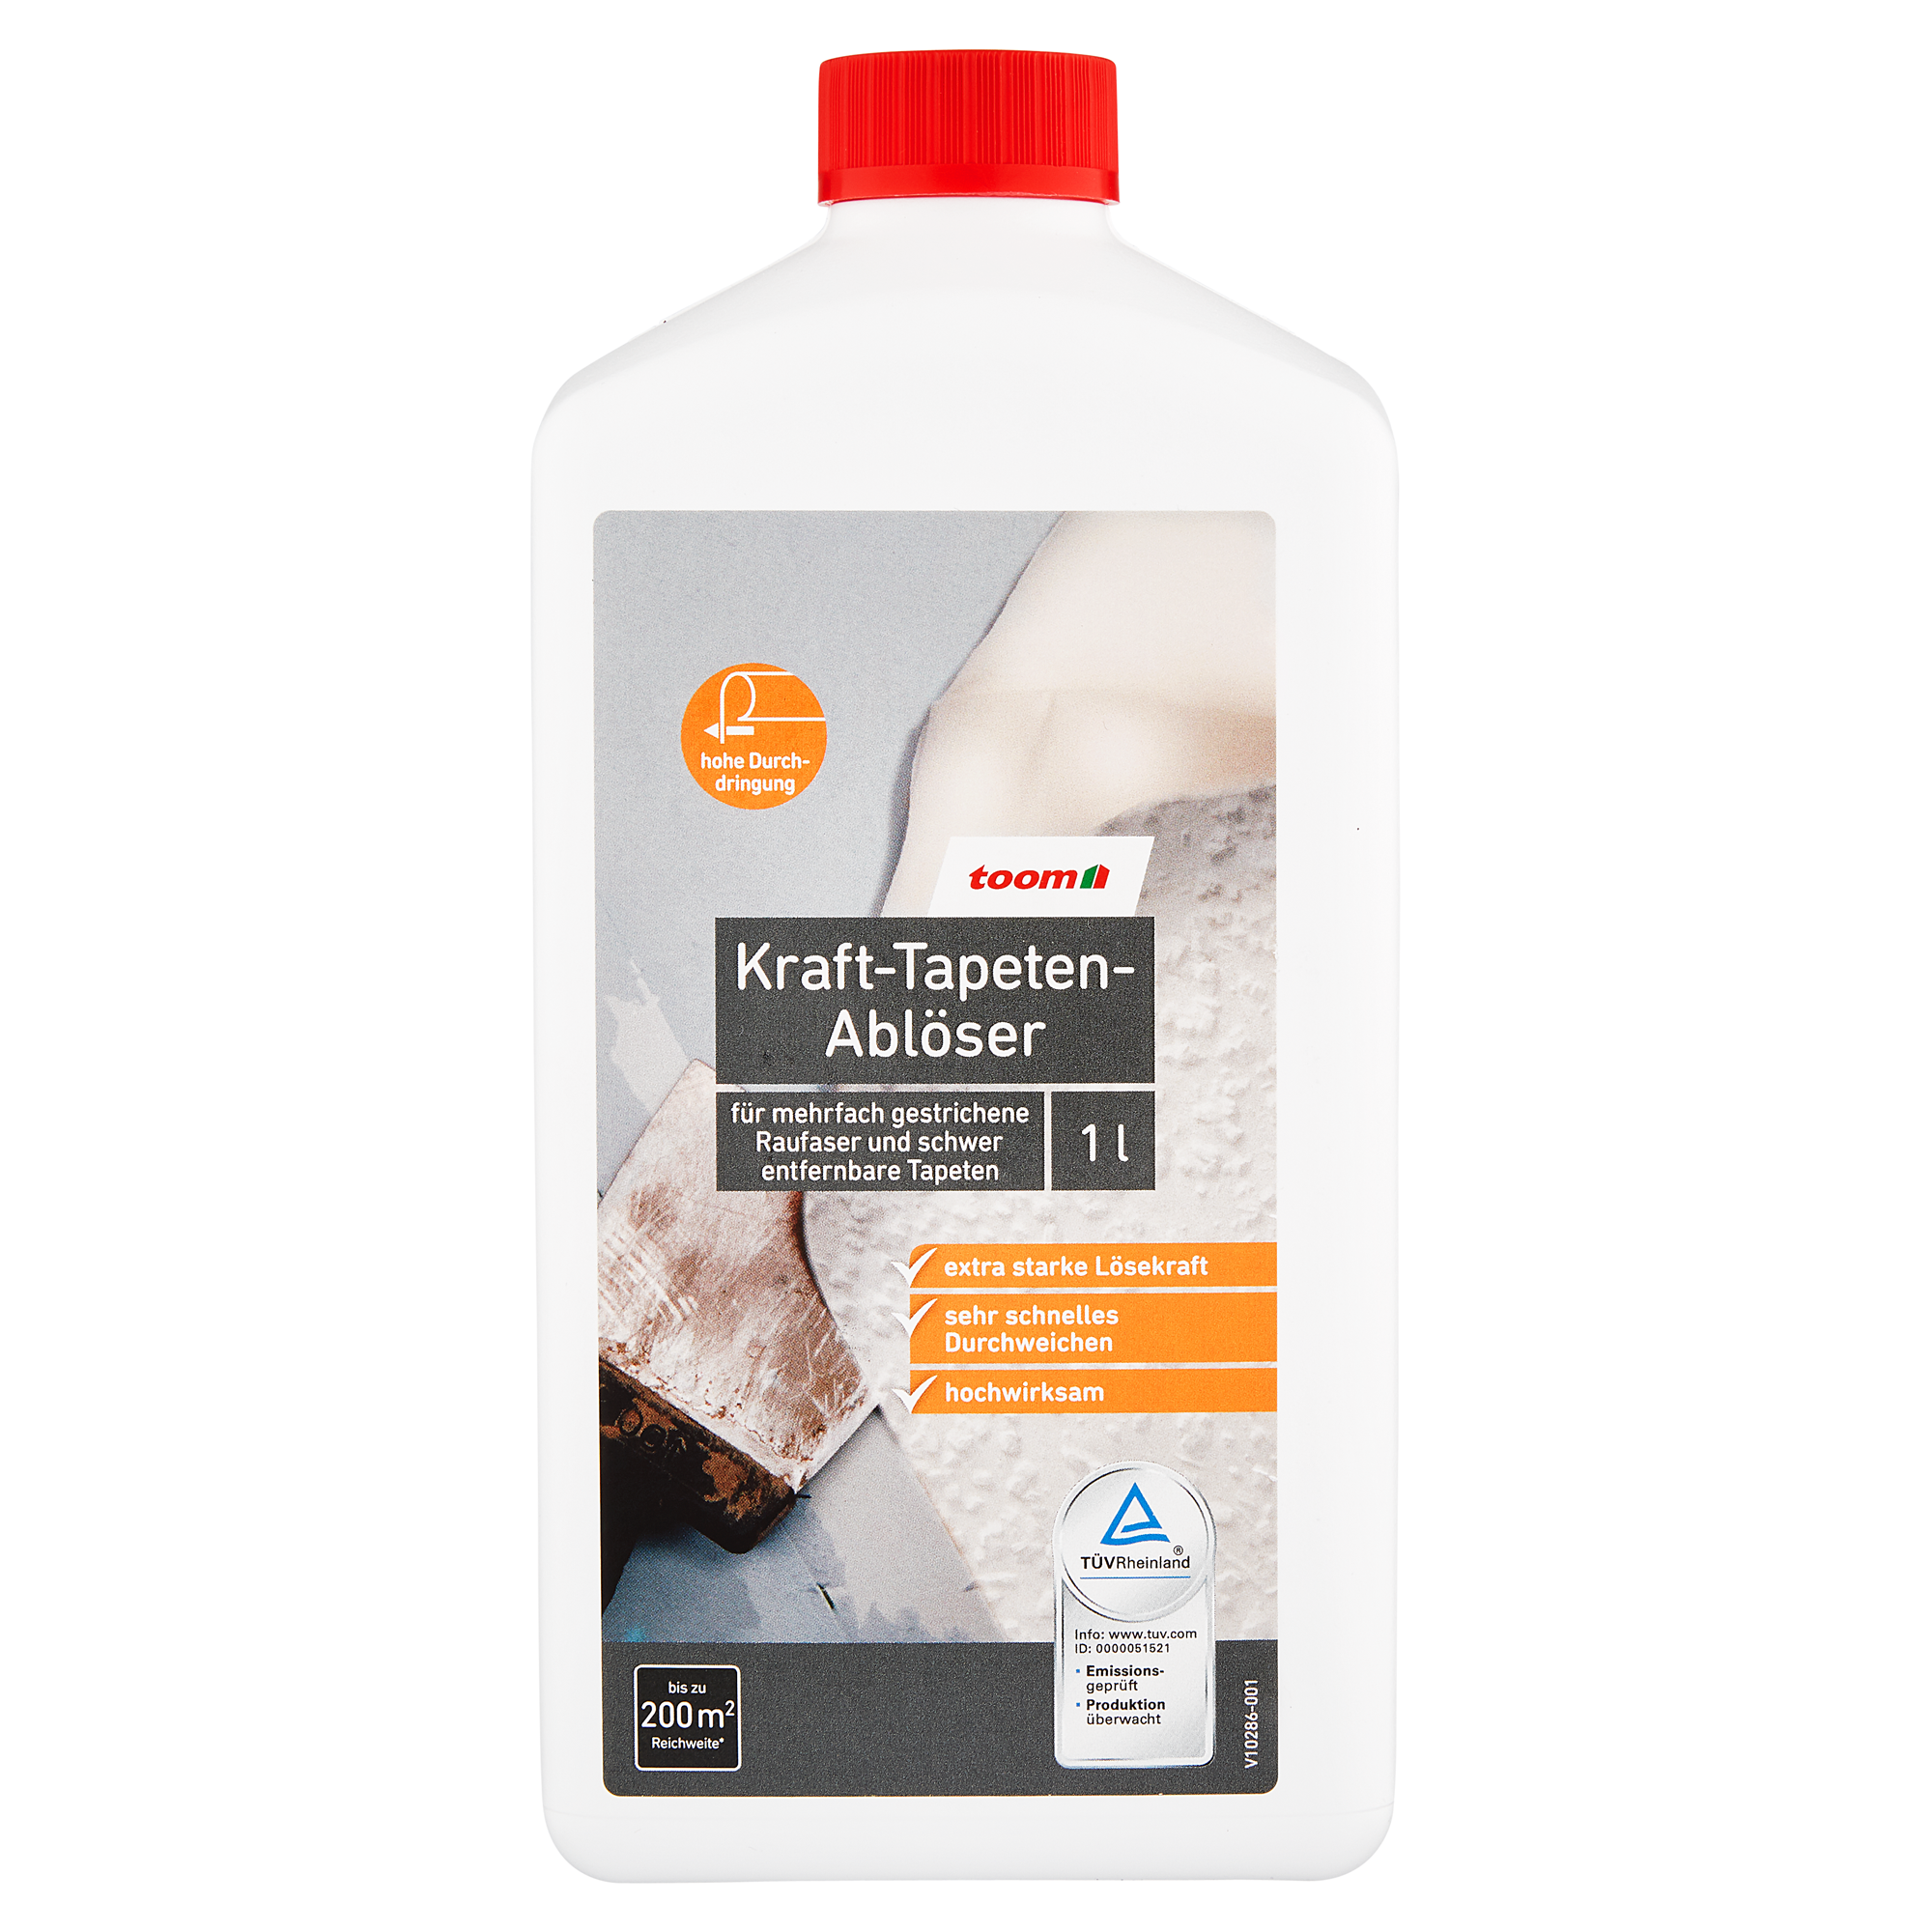 Kraft-Tapeten-Ablöser 1 l + product picture